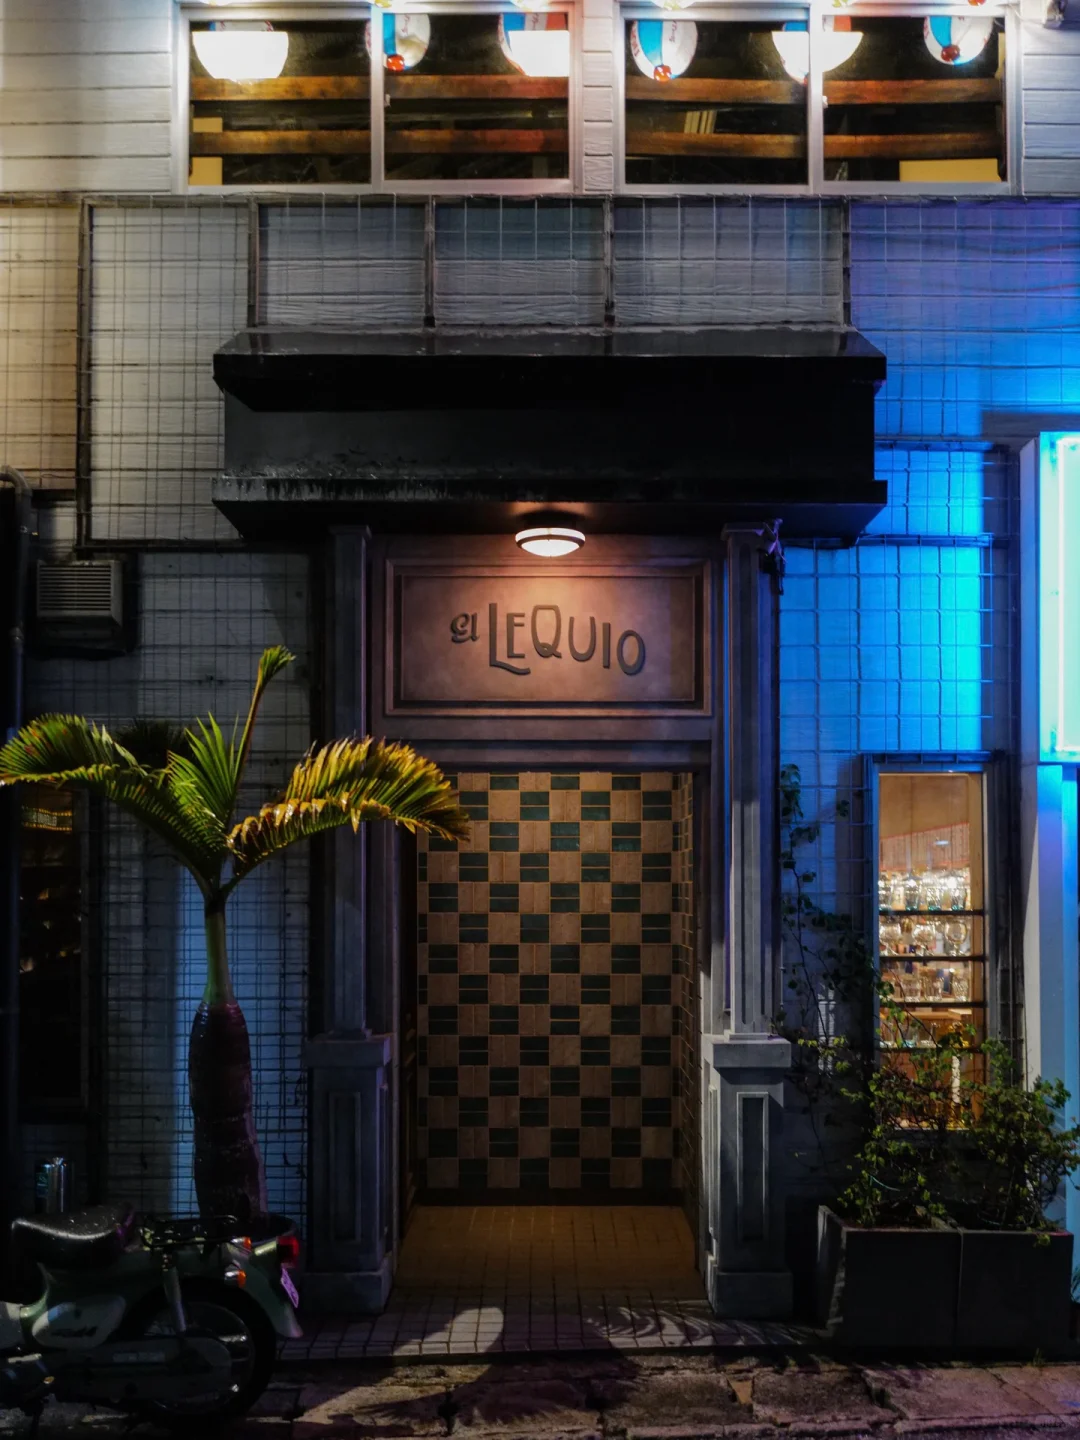 Okinawa-El Lequio🔥, a modern bar in Naha, Okinawa, serves creative cocktails